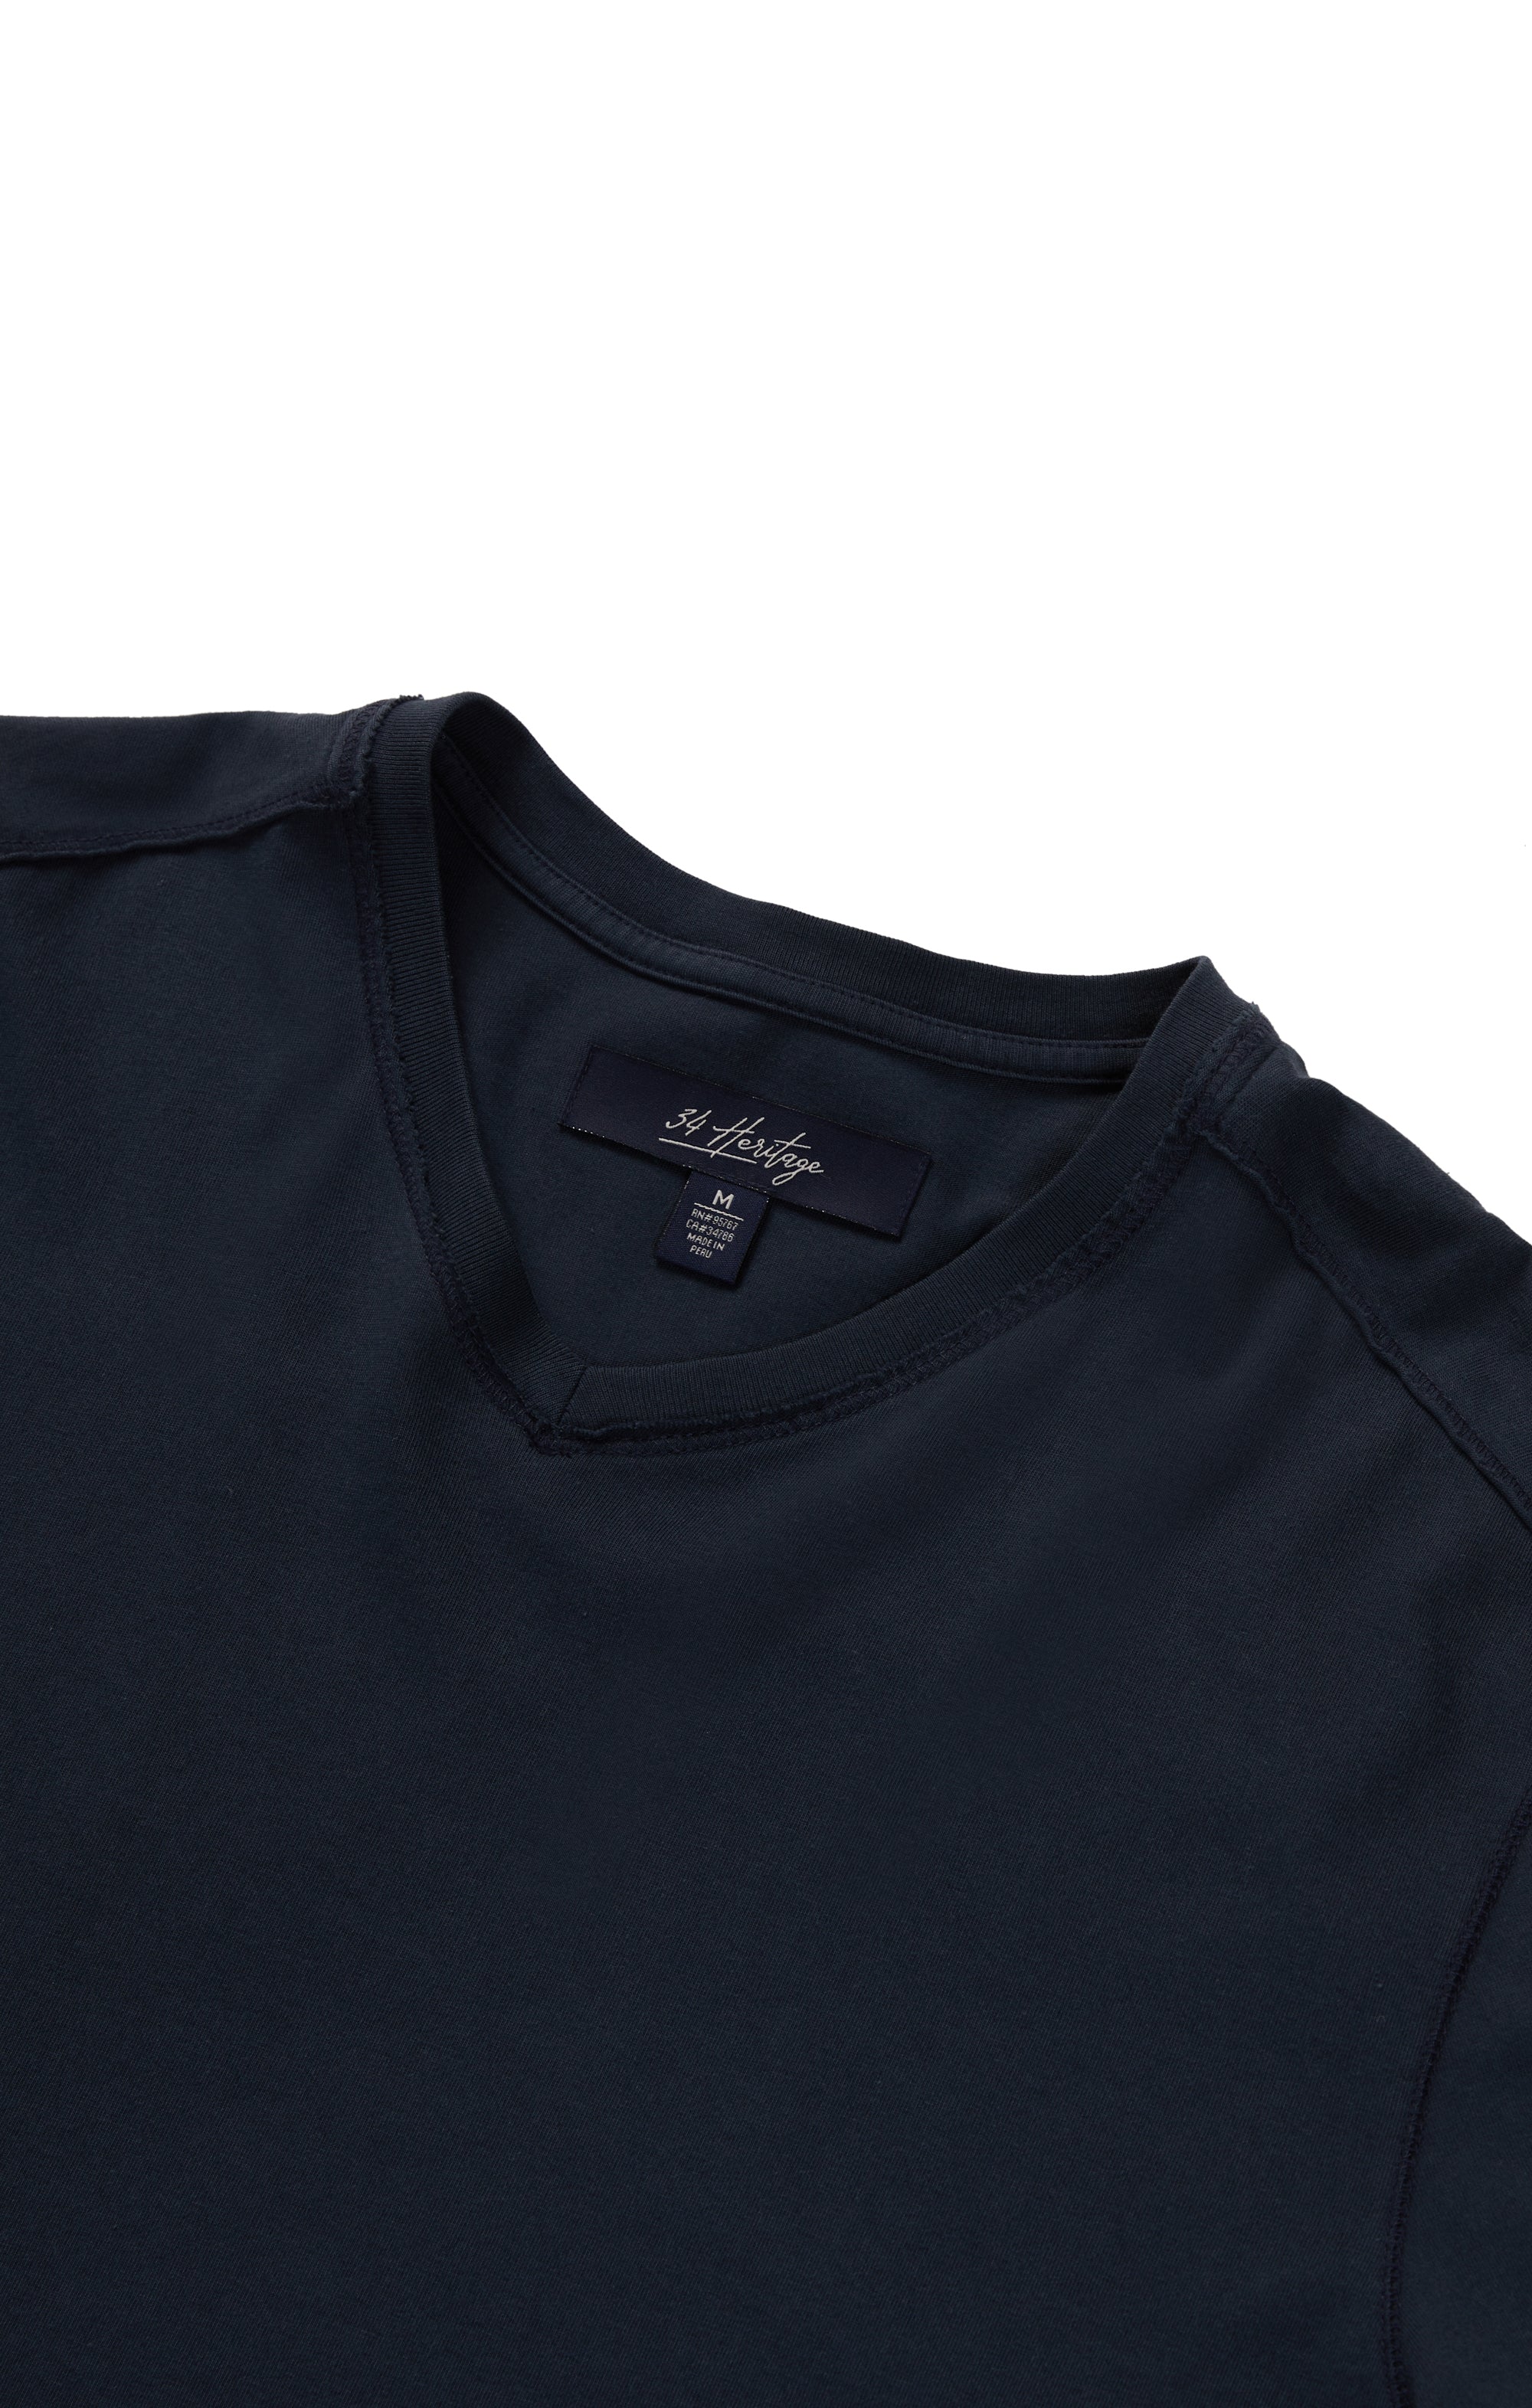 Deconstructed V-Neck T-Shirt in Dark Navy Image 8